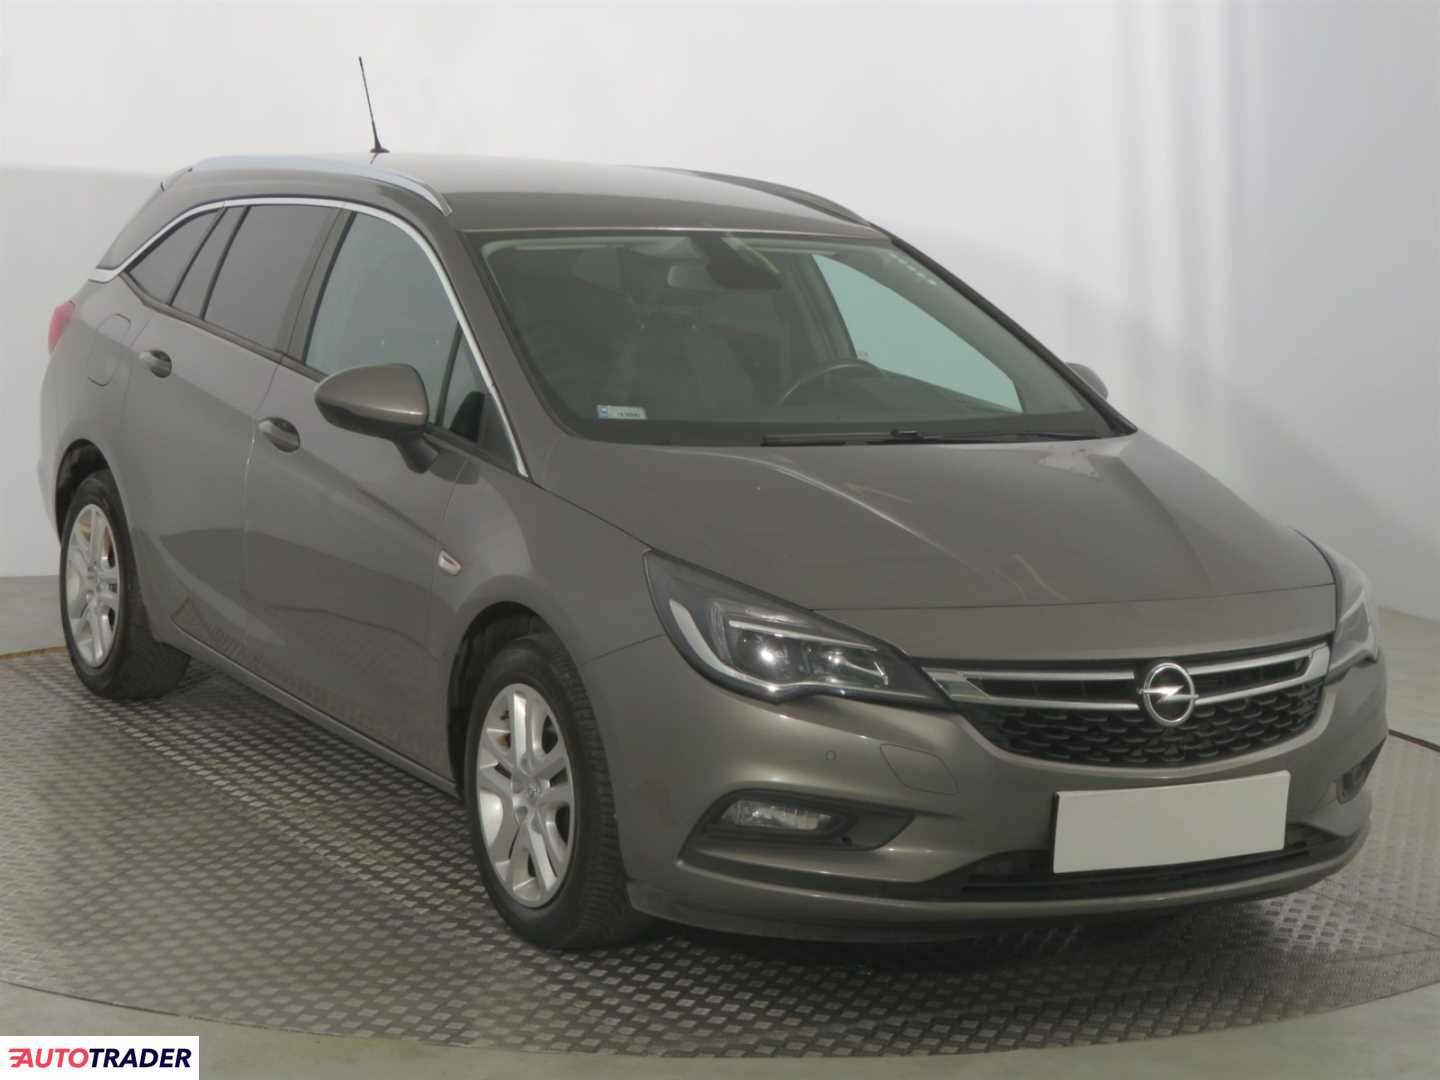 Opel Astra 2017 1.4 123 KM